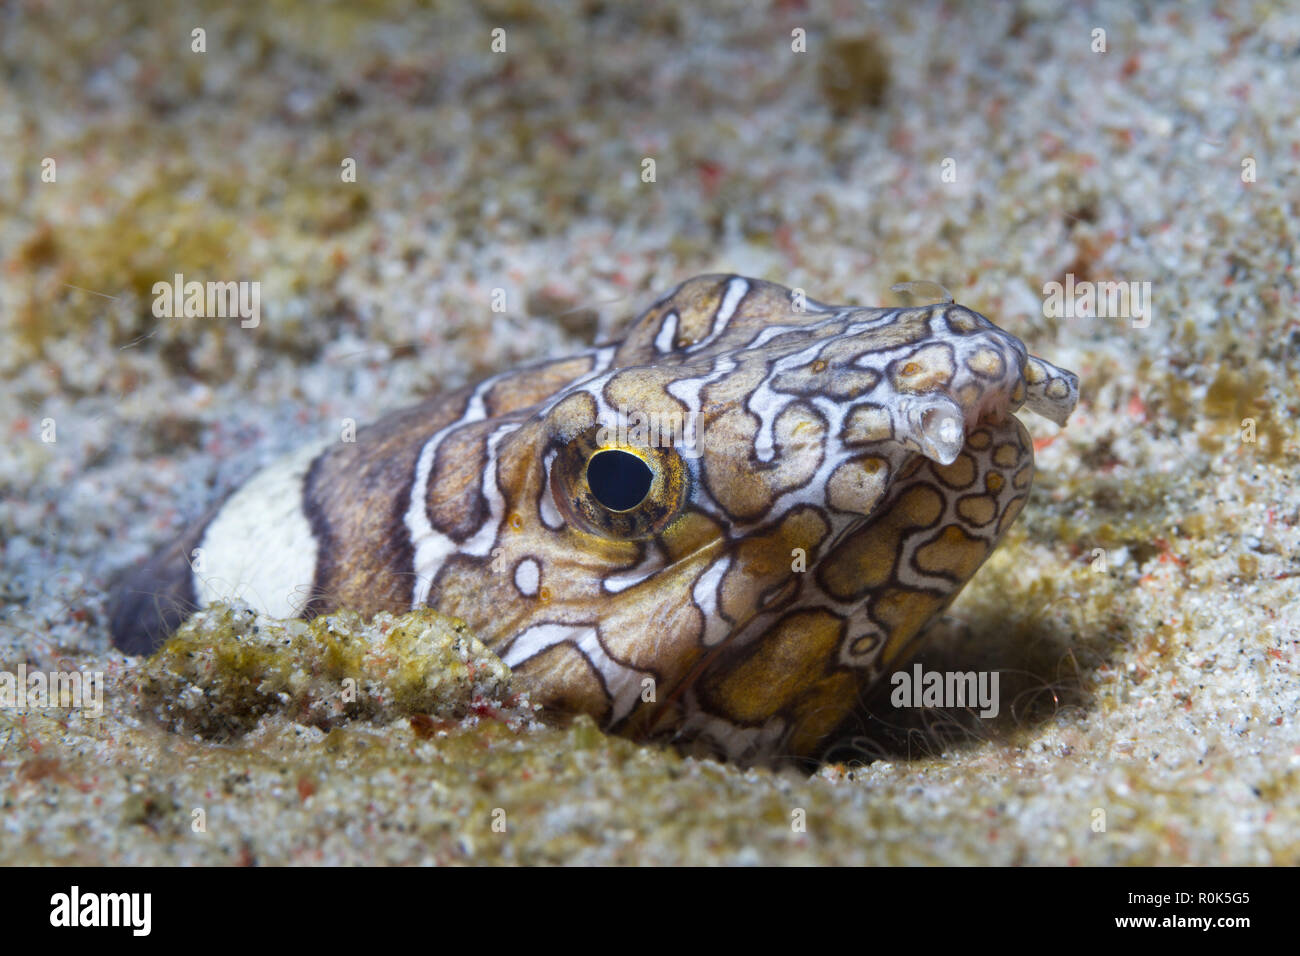 Clown snake Eel versteckt im Sand, Philippinen. Stockfoto